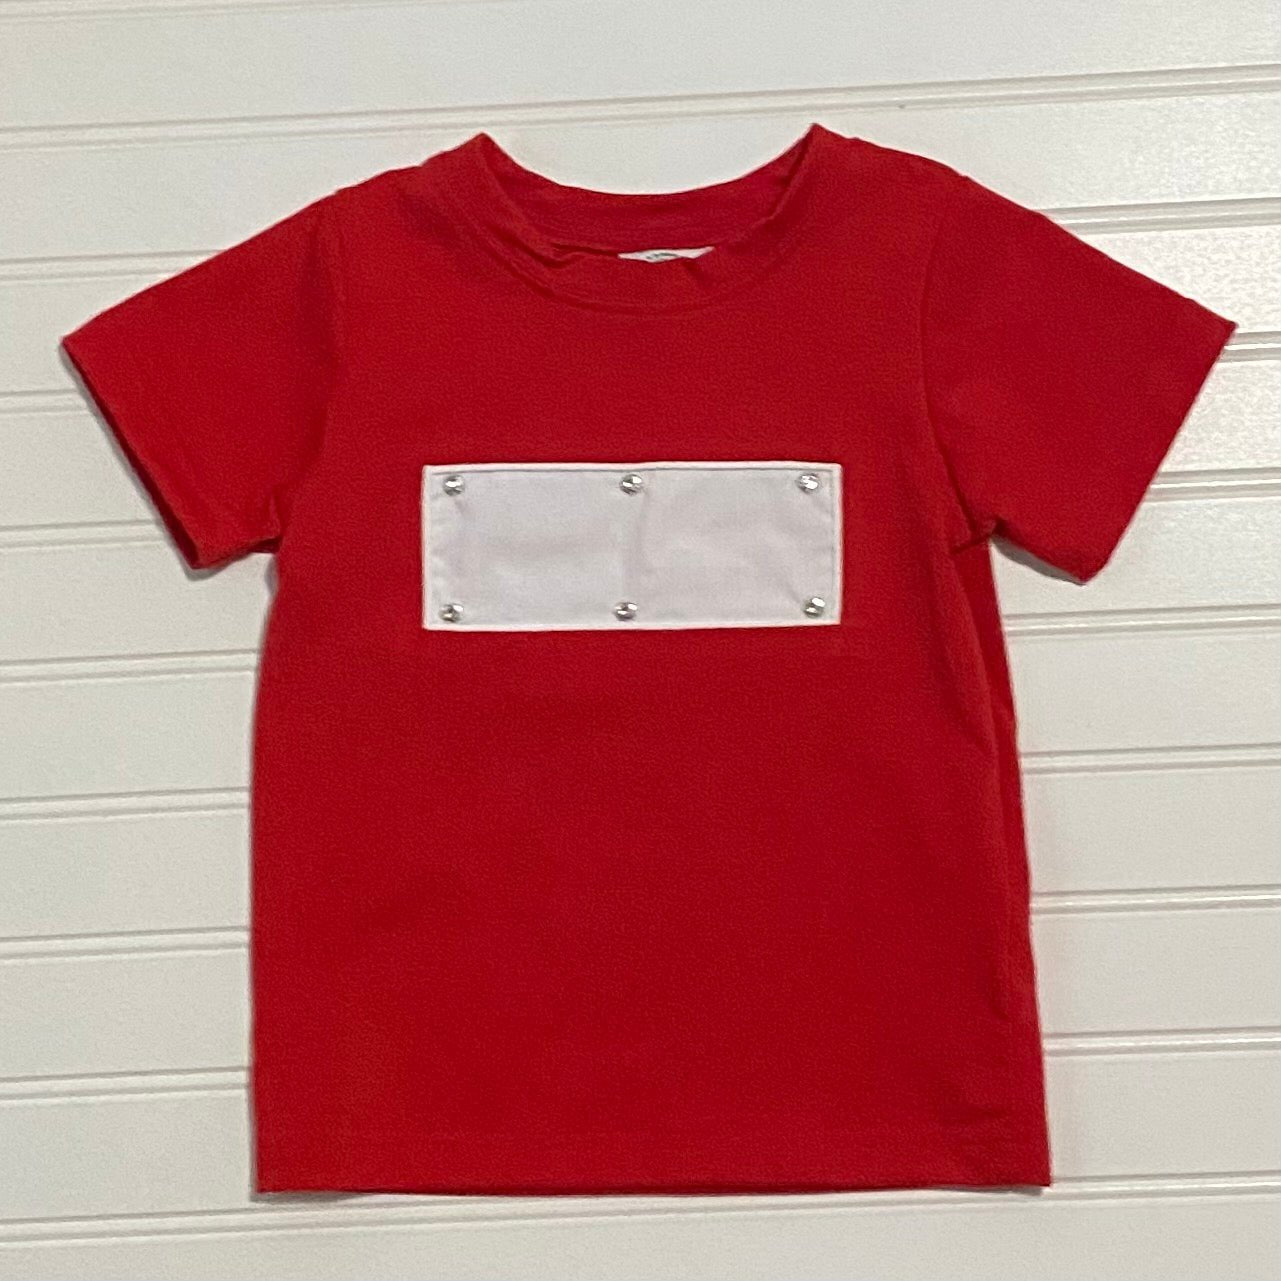 Swap-A-Smock Boys Short Sleeve Shirt - Red